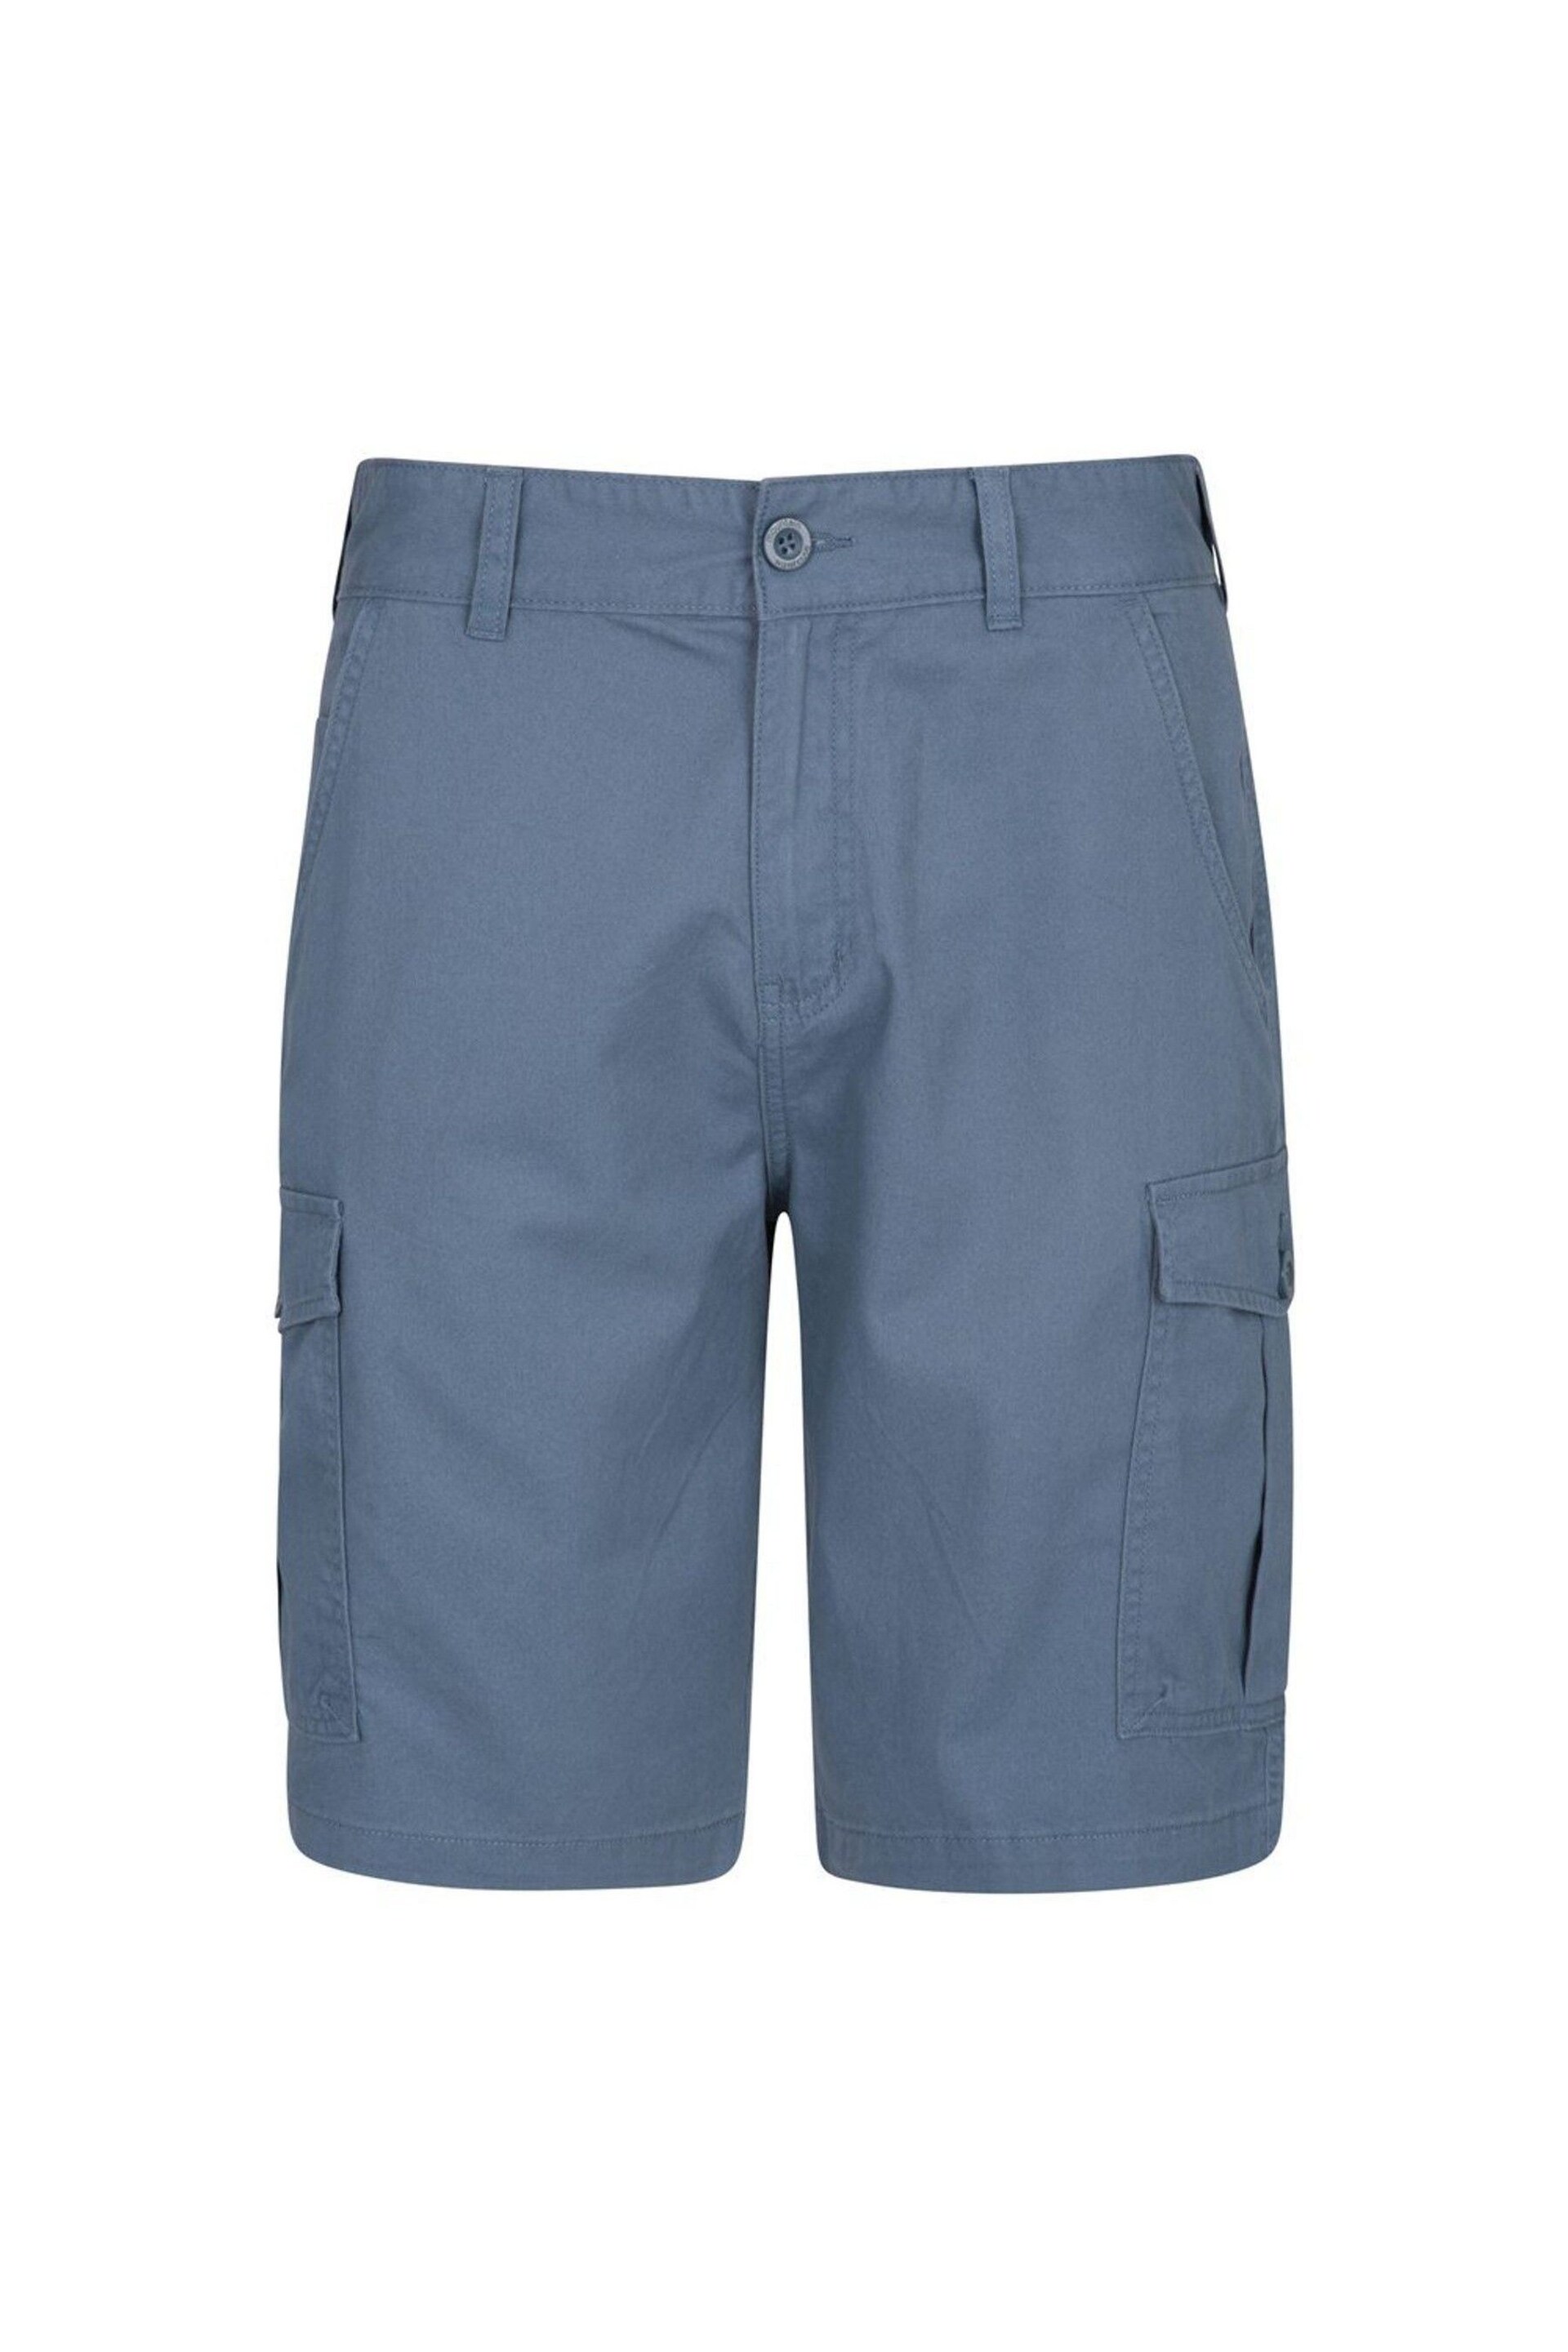 Mountain Warehouse Blue Lakeside Mens Cargo Shorts - Image 1 of 4